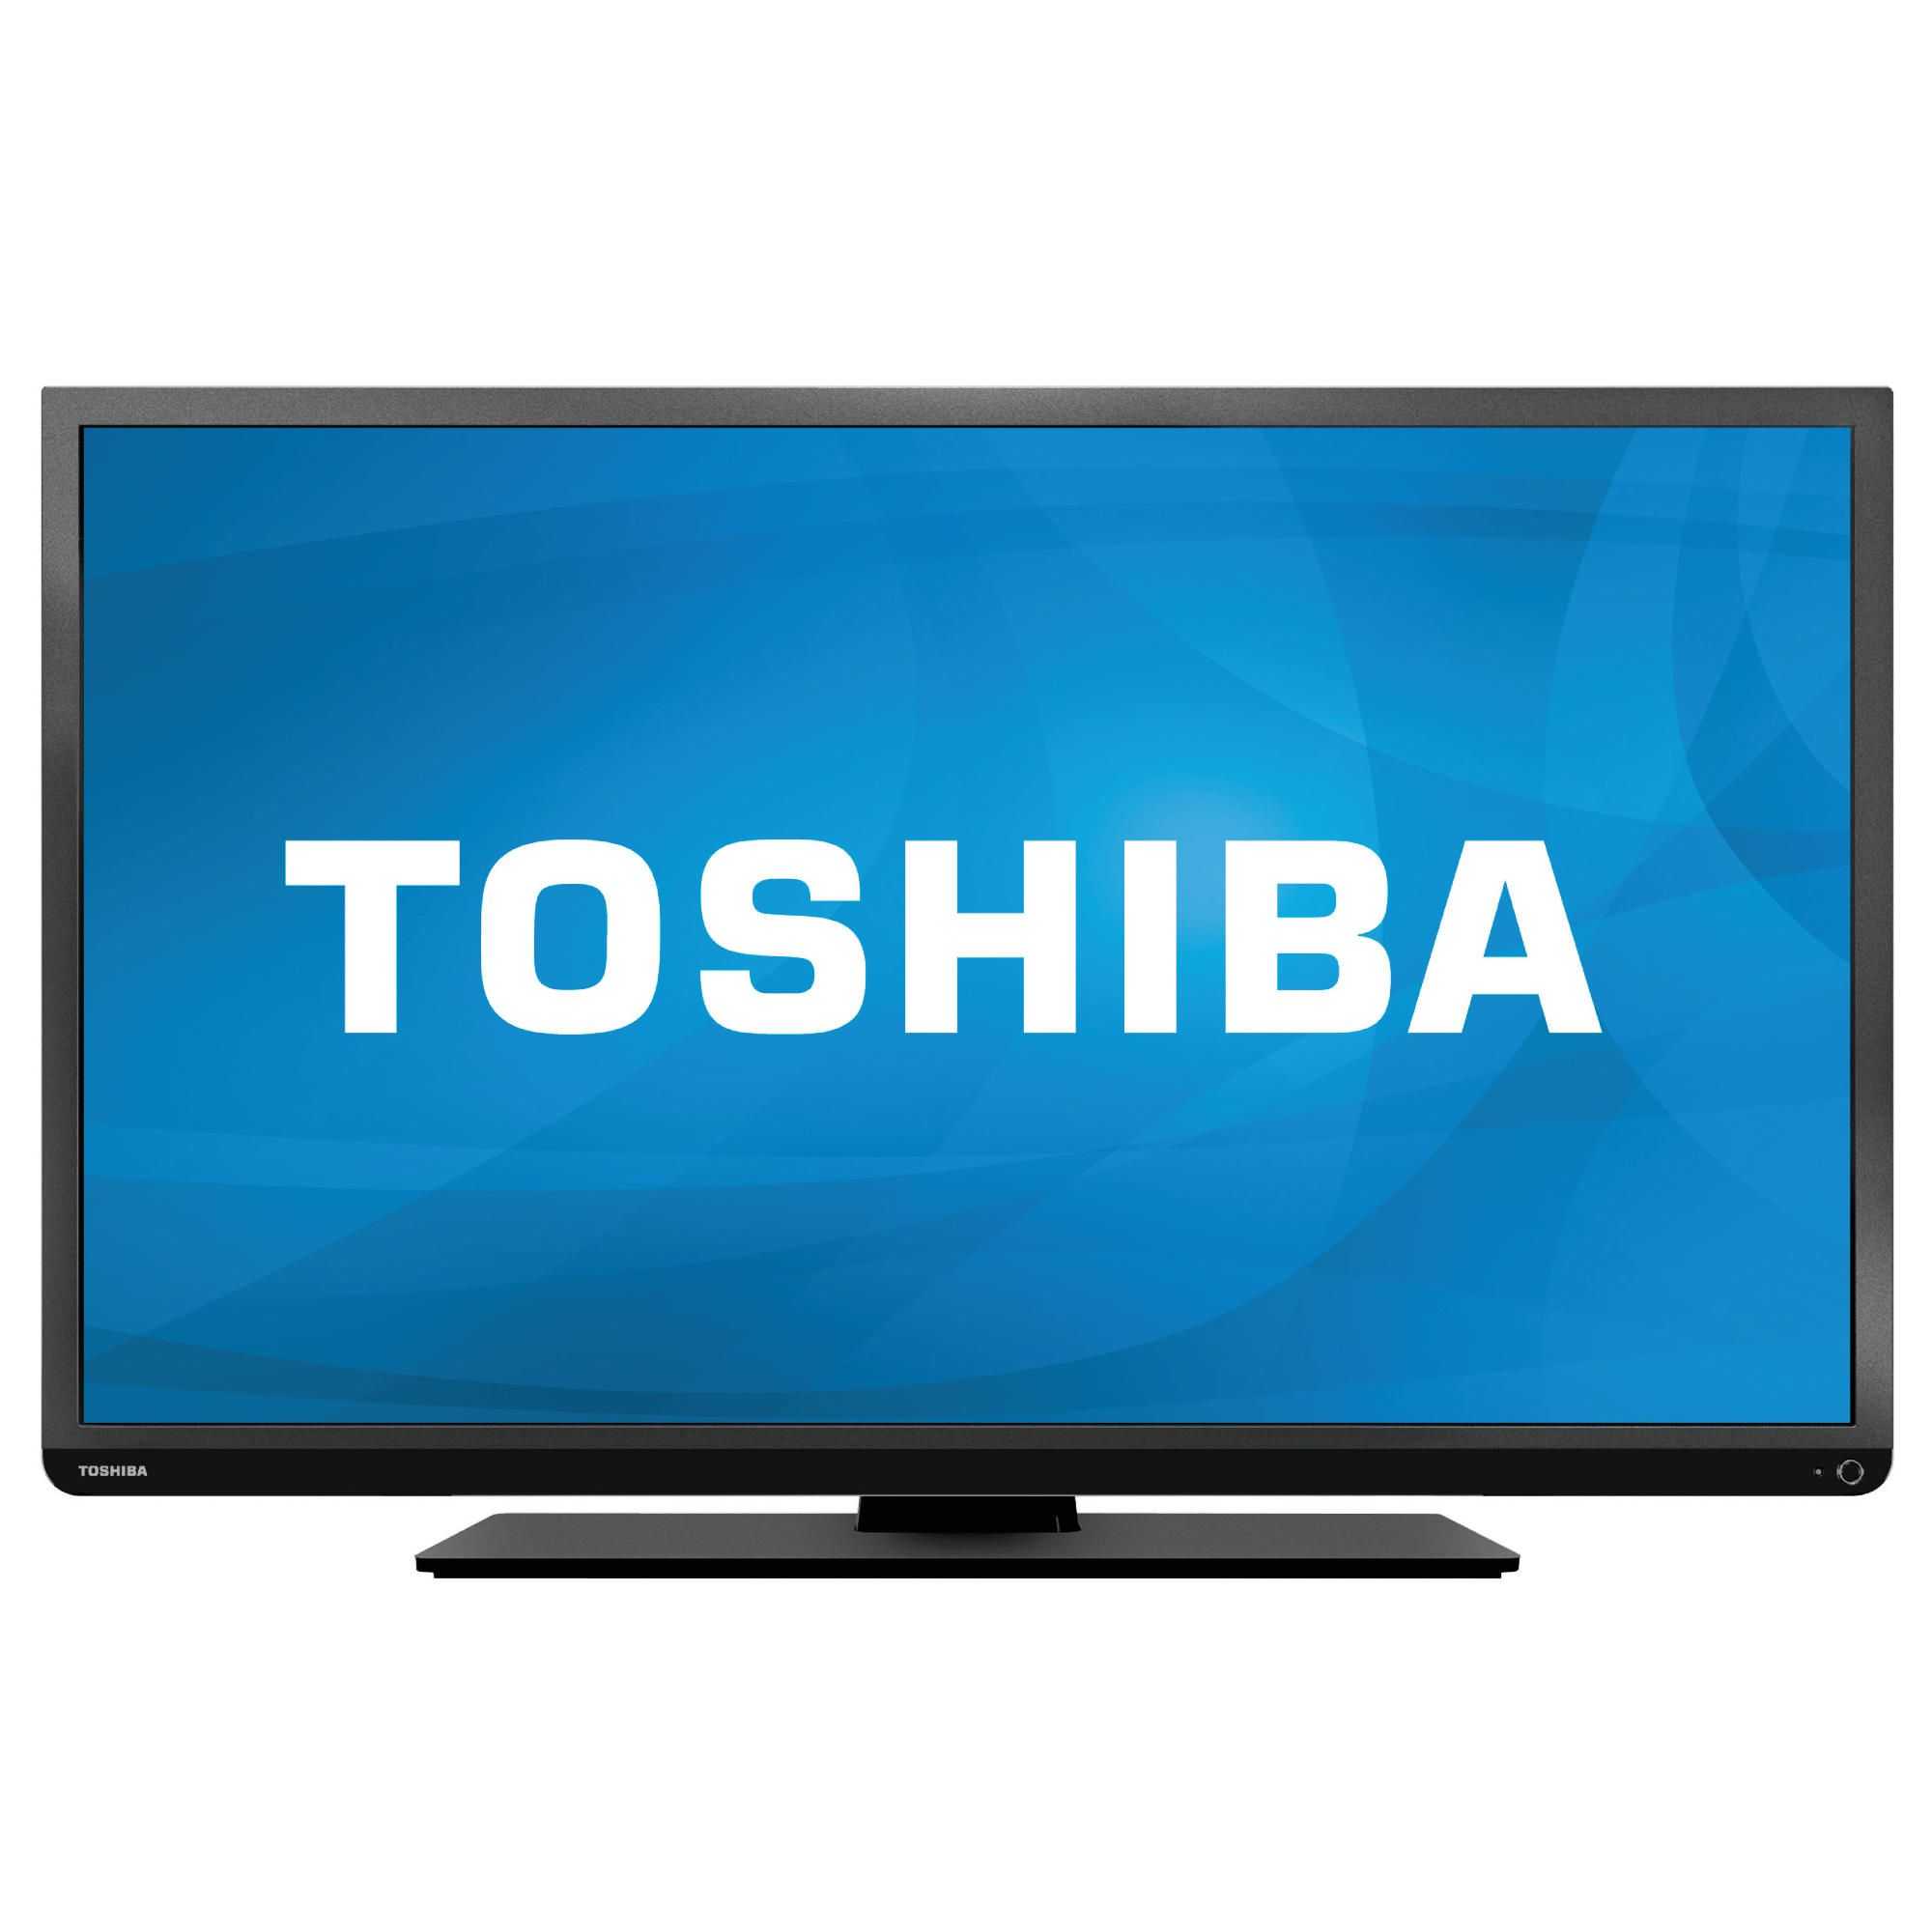 Жк-телевизор toshiba 40l7363rk в москве. купить жк-телевизор toshiba 40l7363rk. цены на жк-телевизор toshiba 40l7363rk. где купить жк-телевизор toshiba 40l7363rk?